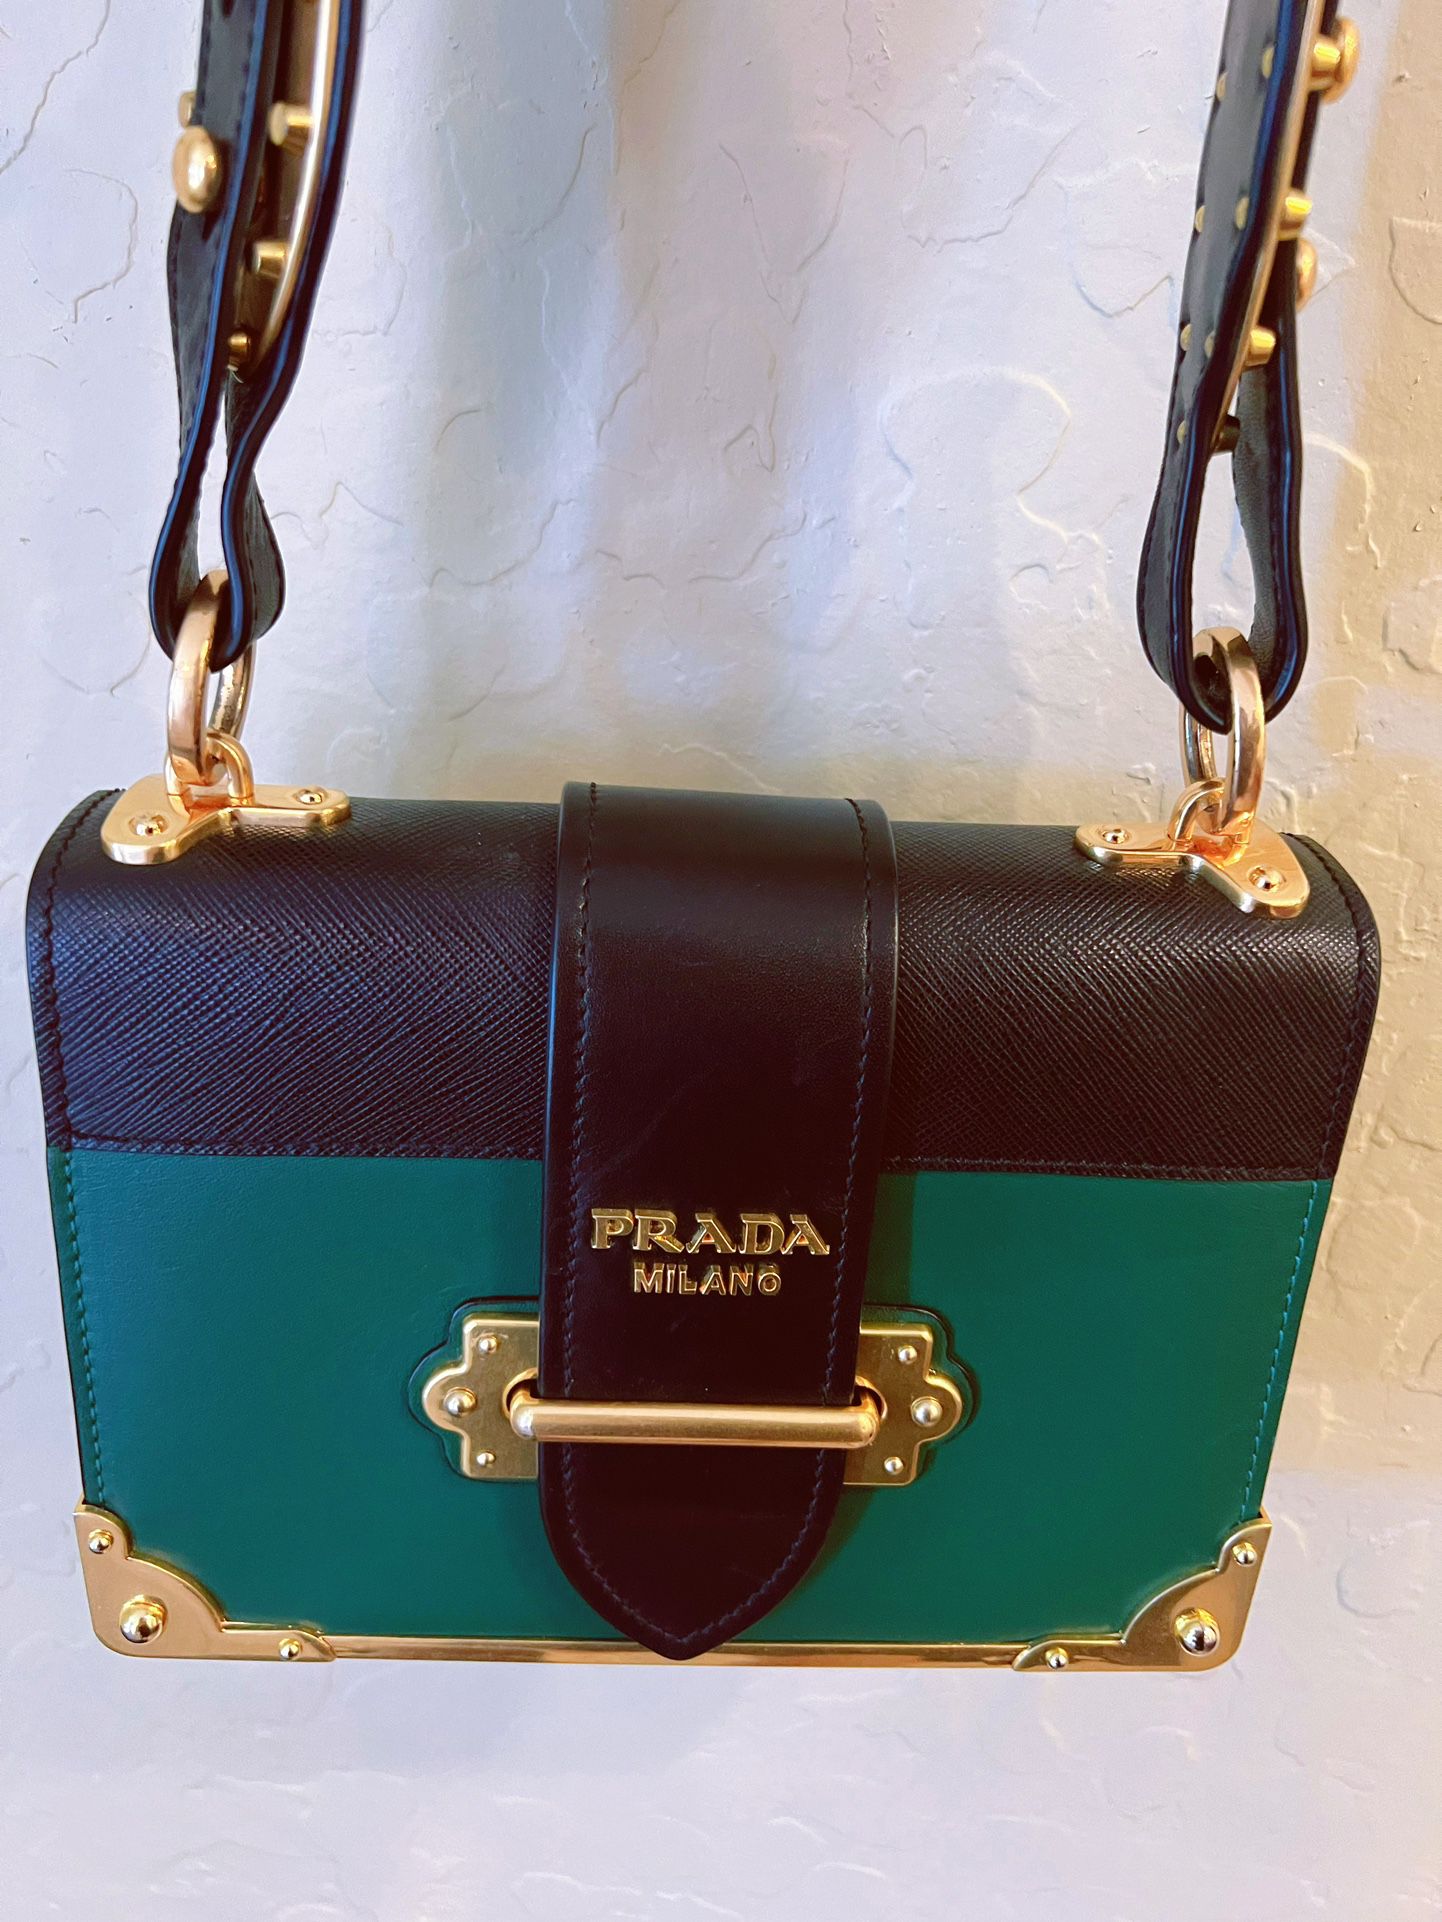 Prada Cagier Leather Handbag